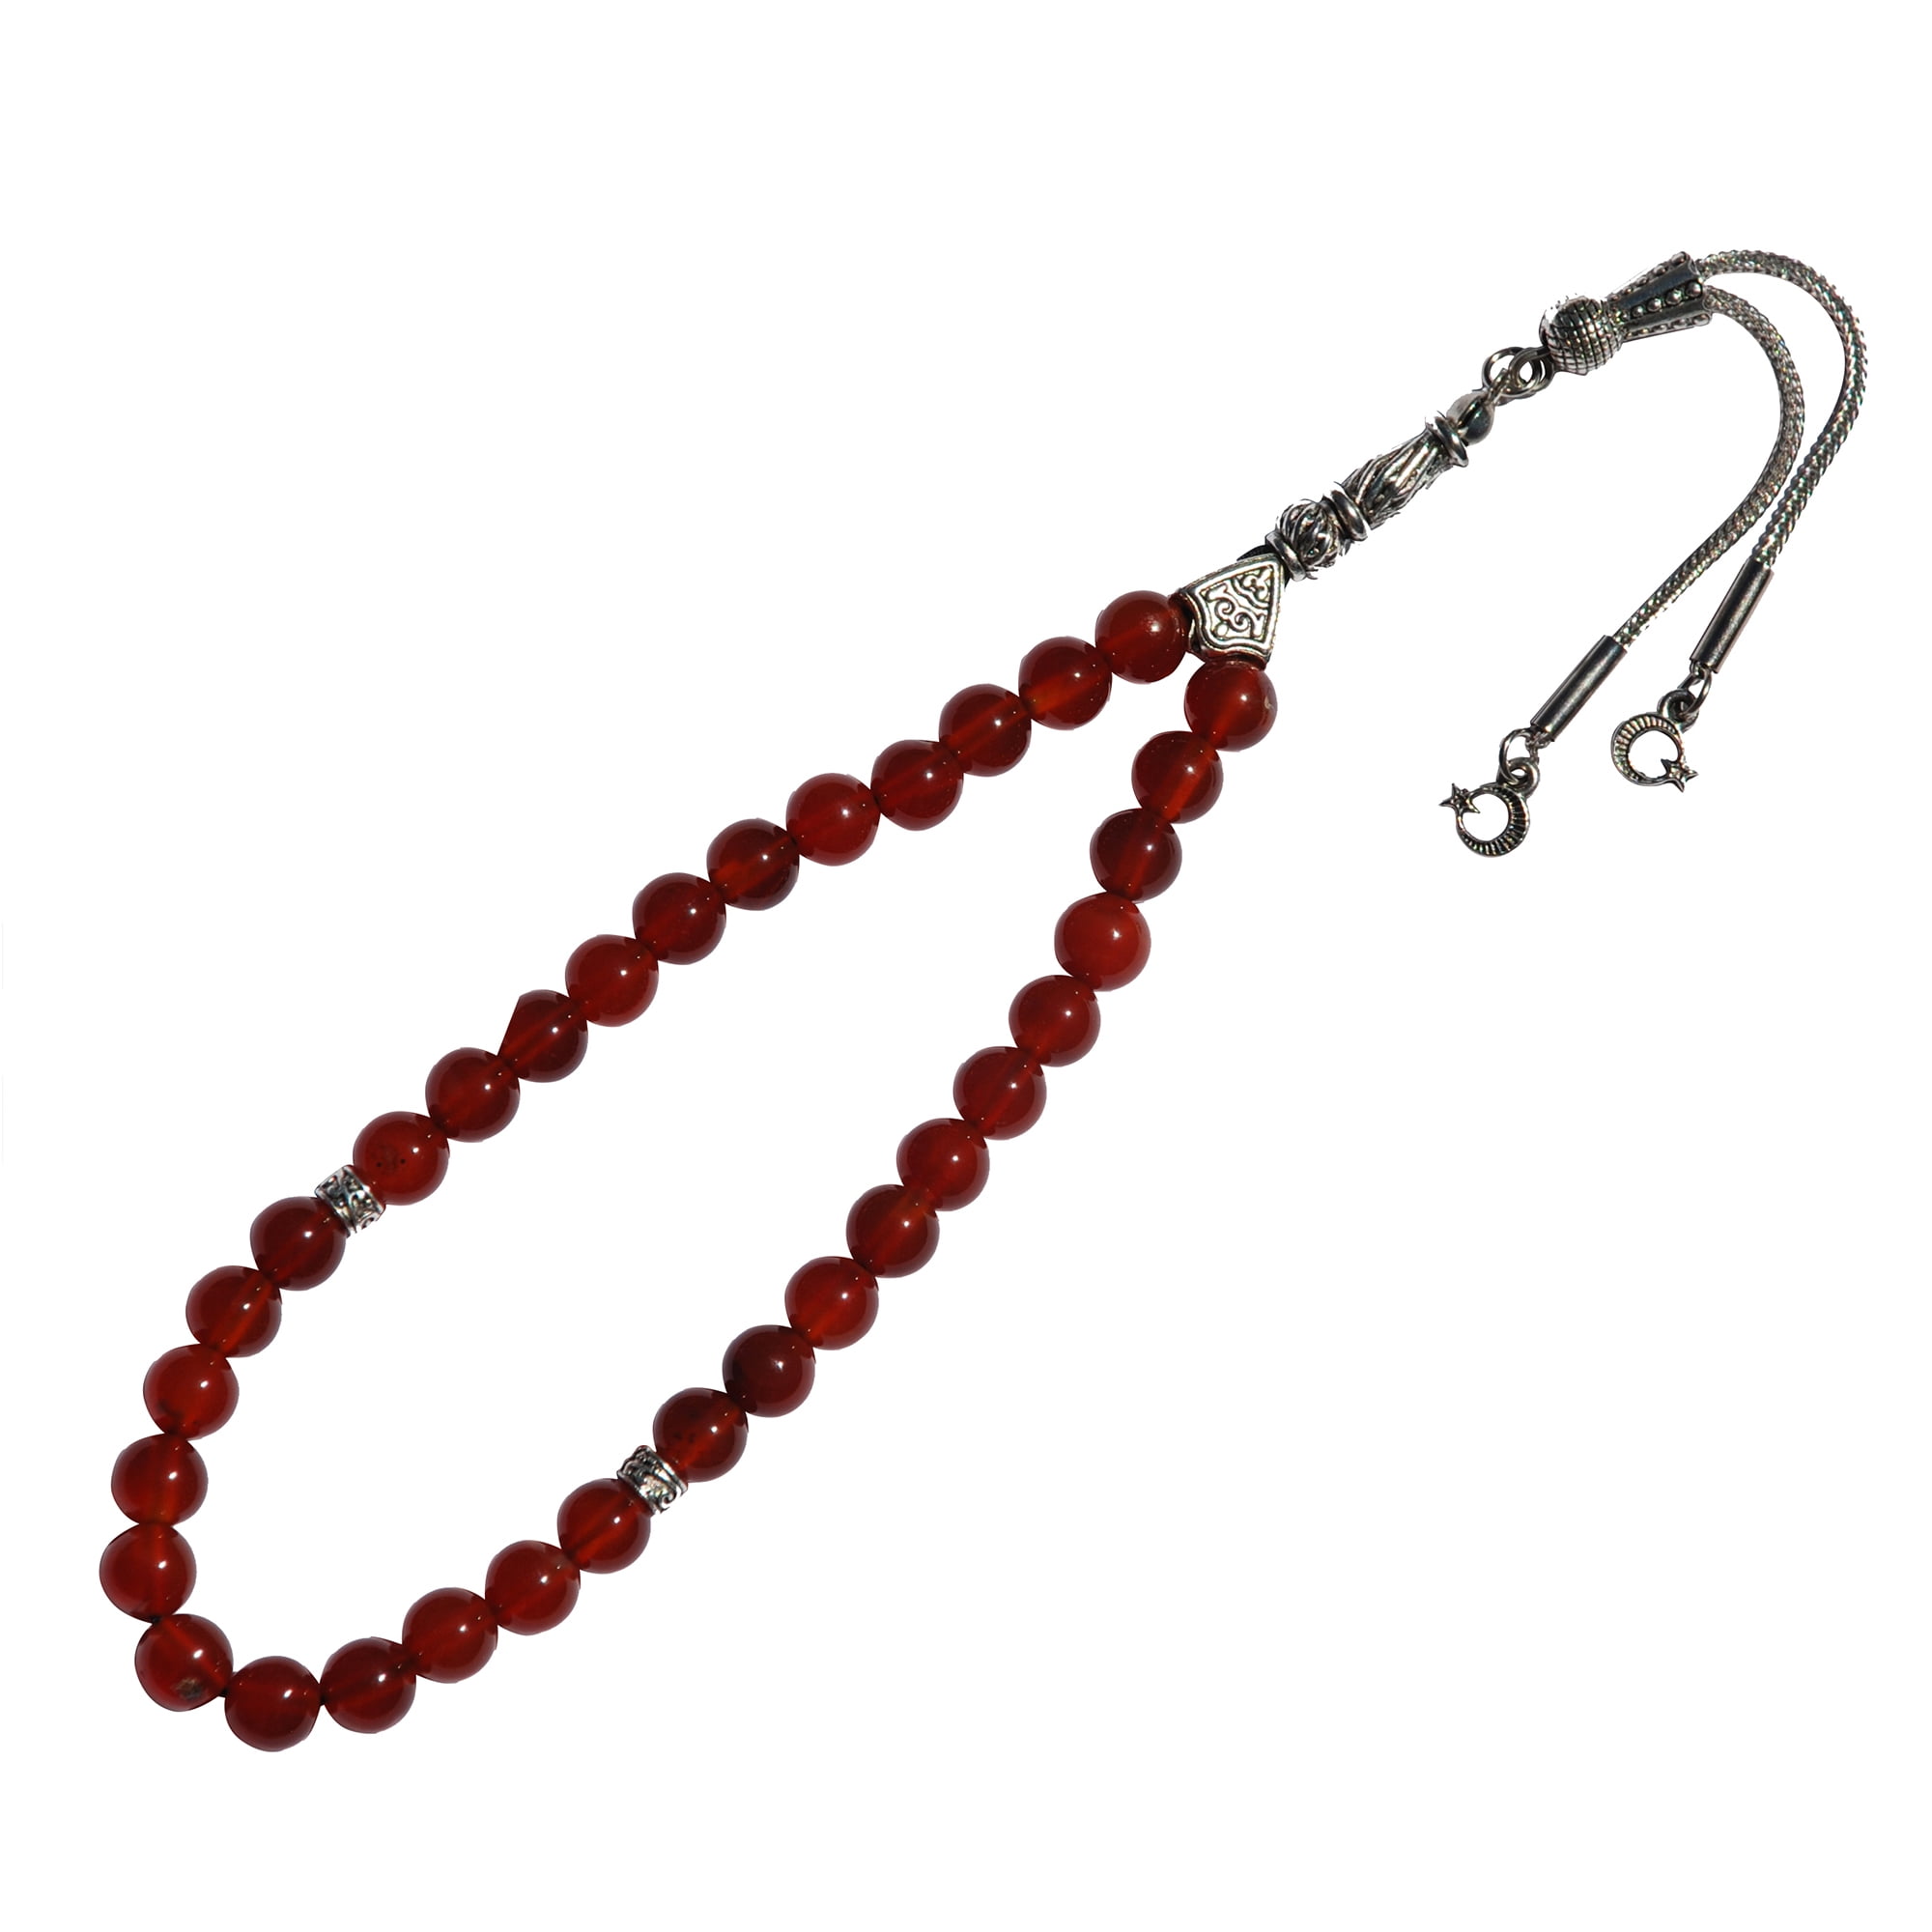 Prayer chain CHICKEN BLOOD Charm Agate Beads Bracelet 